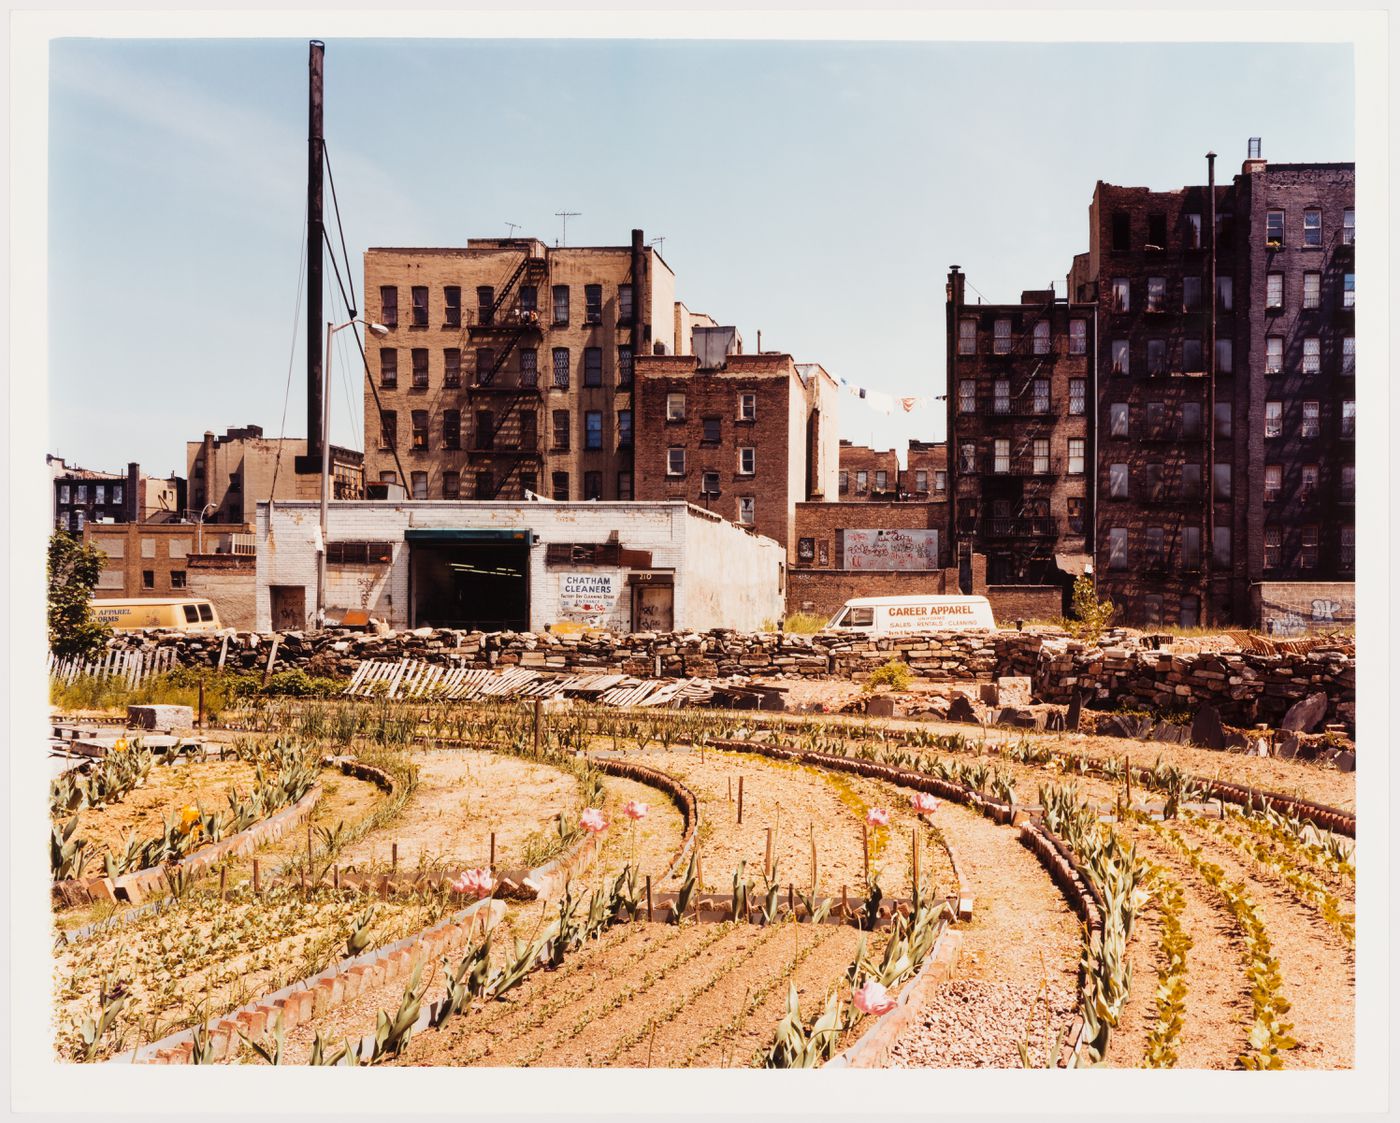 Eldridge Street, Adam Purple's circular "Garden of Eden" (demolished in 1986) in foreground, New York City, New York